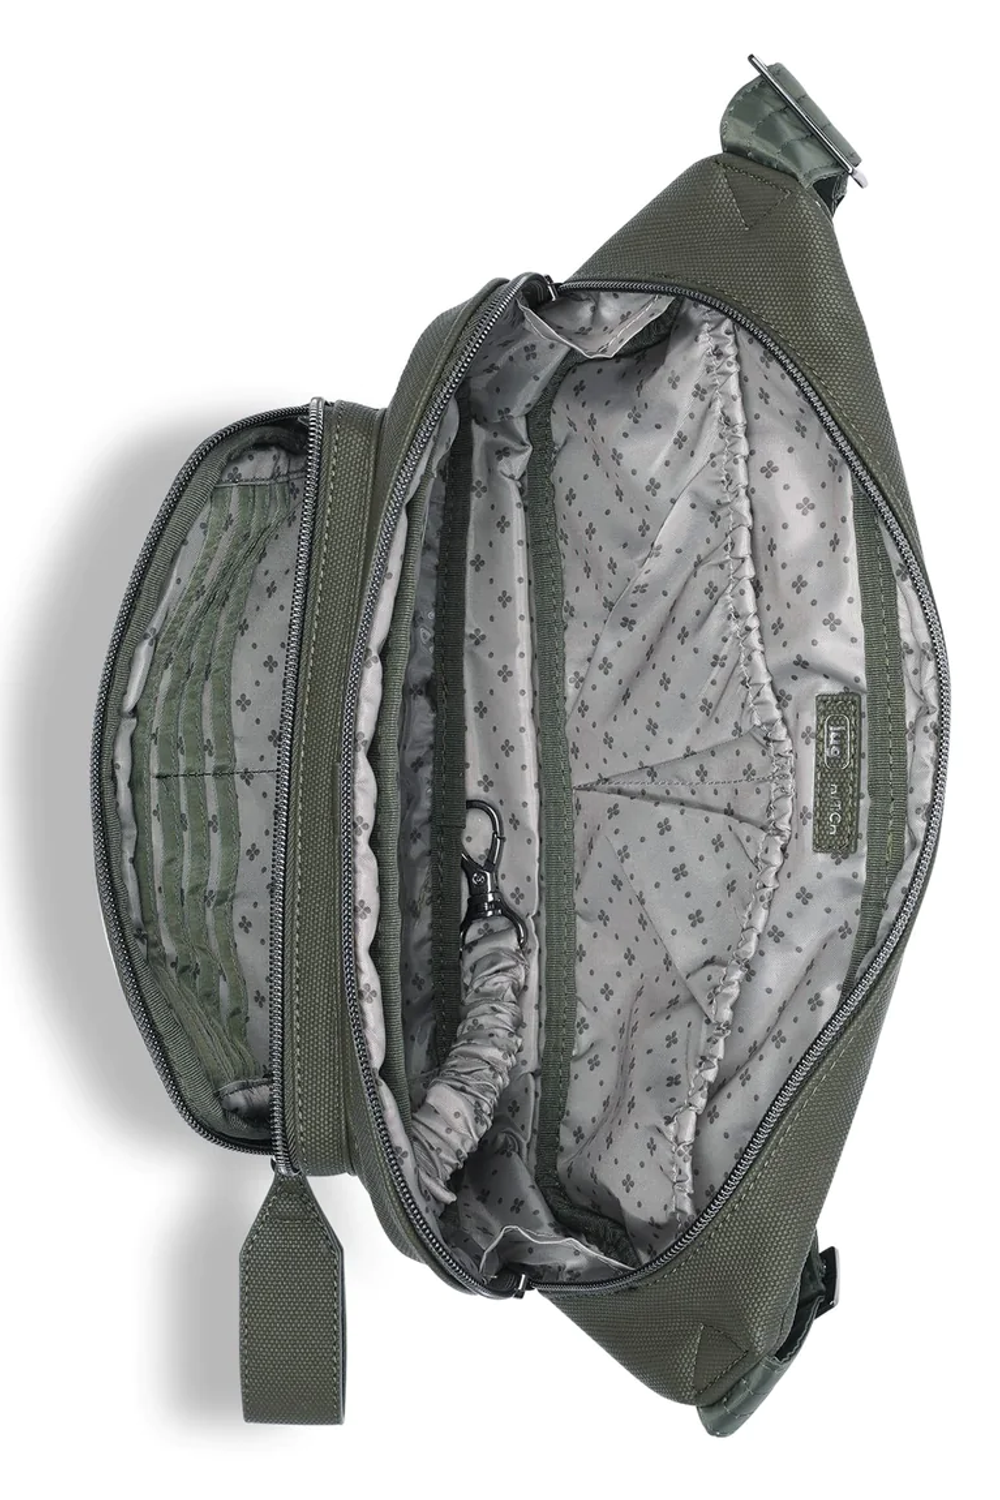 IHKWIP Convertible Sling Waist Bag ,Military Olive